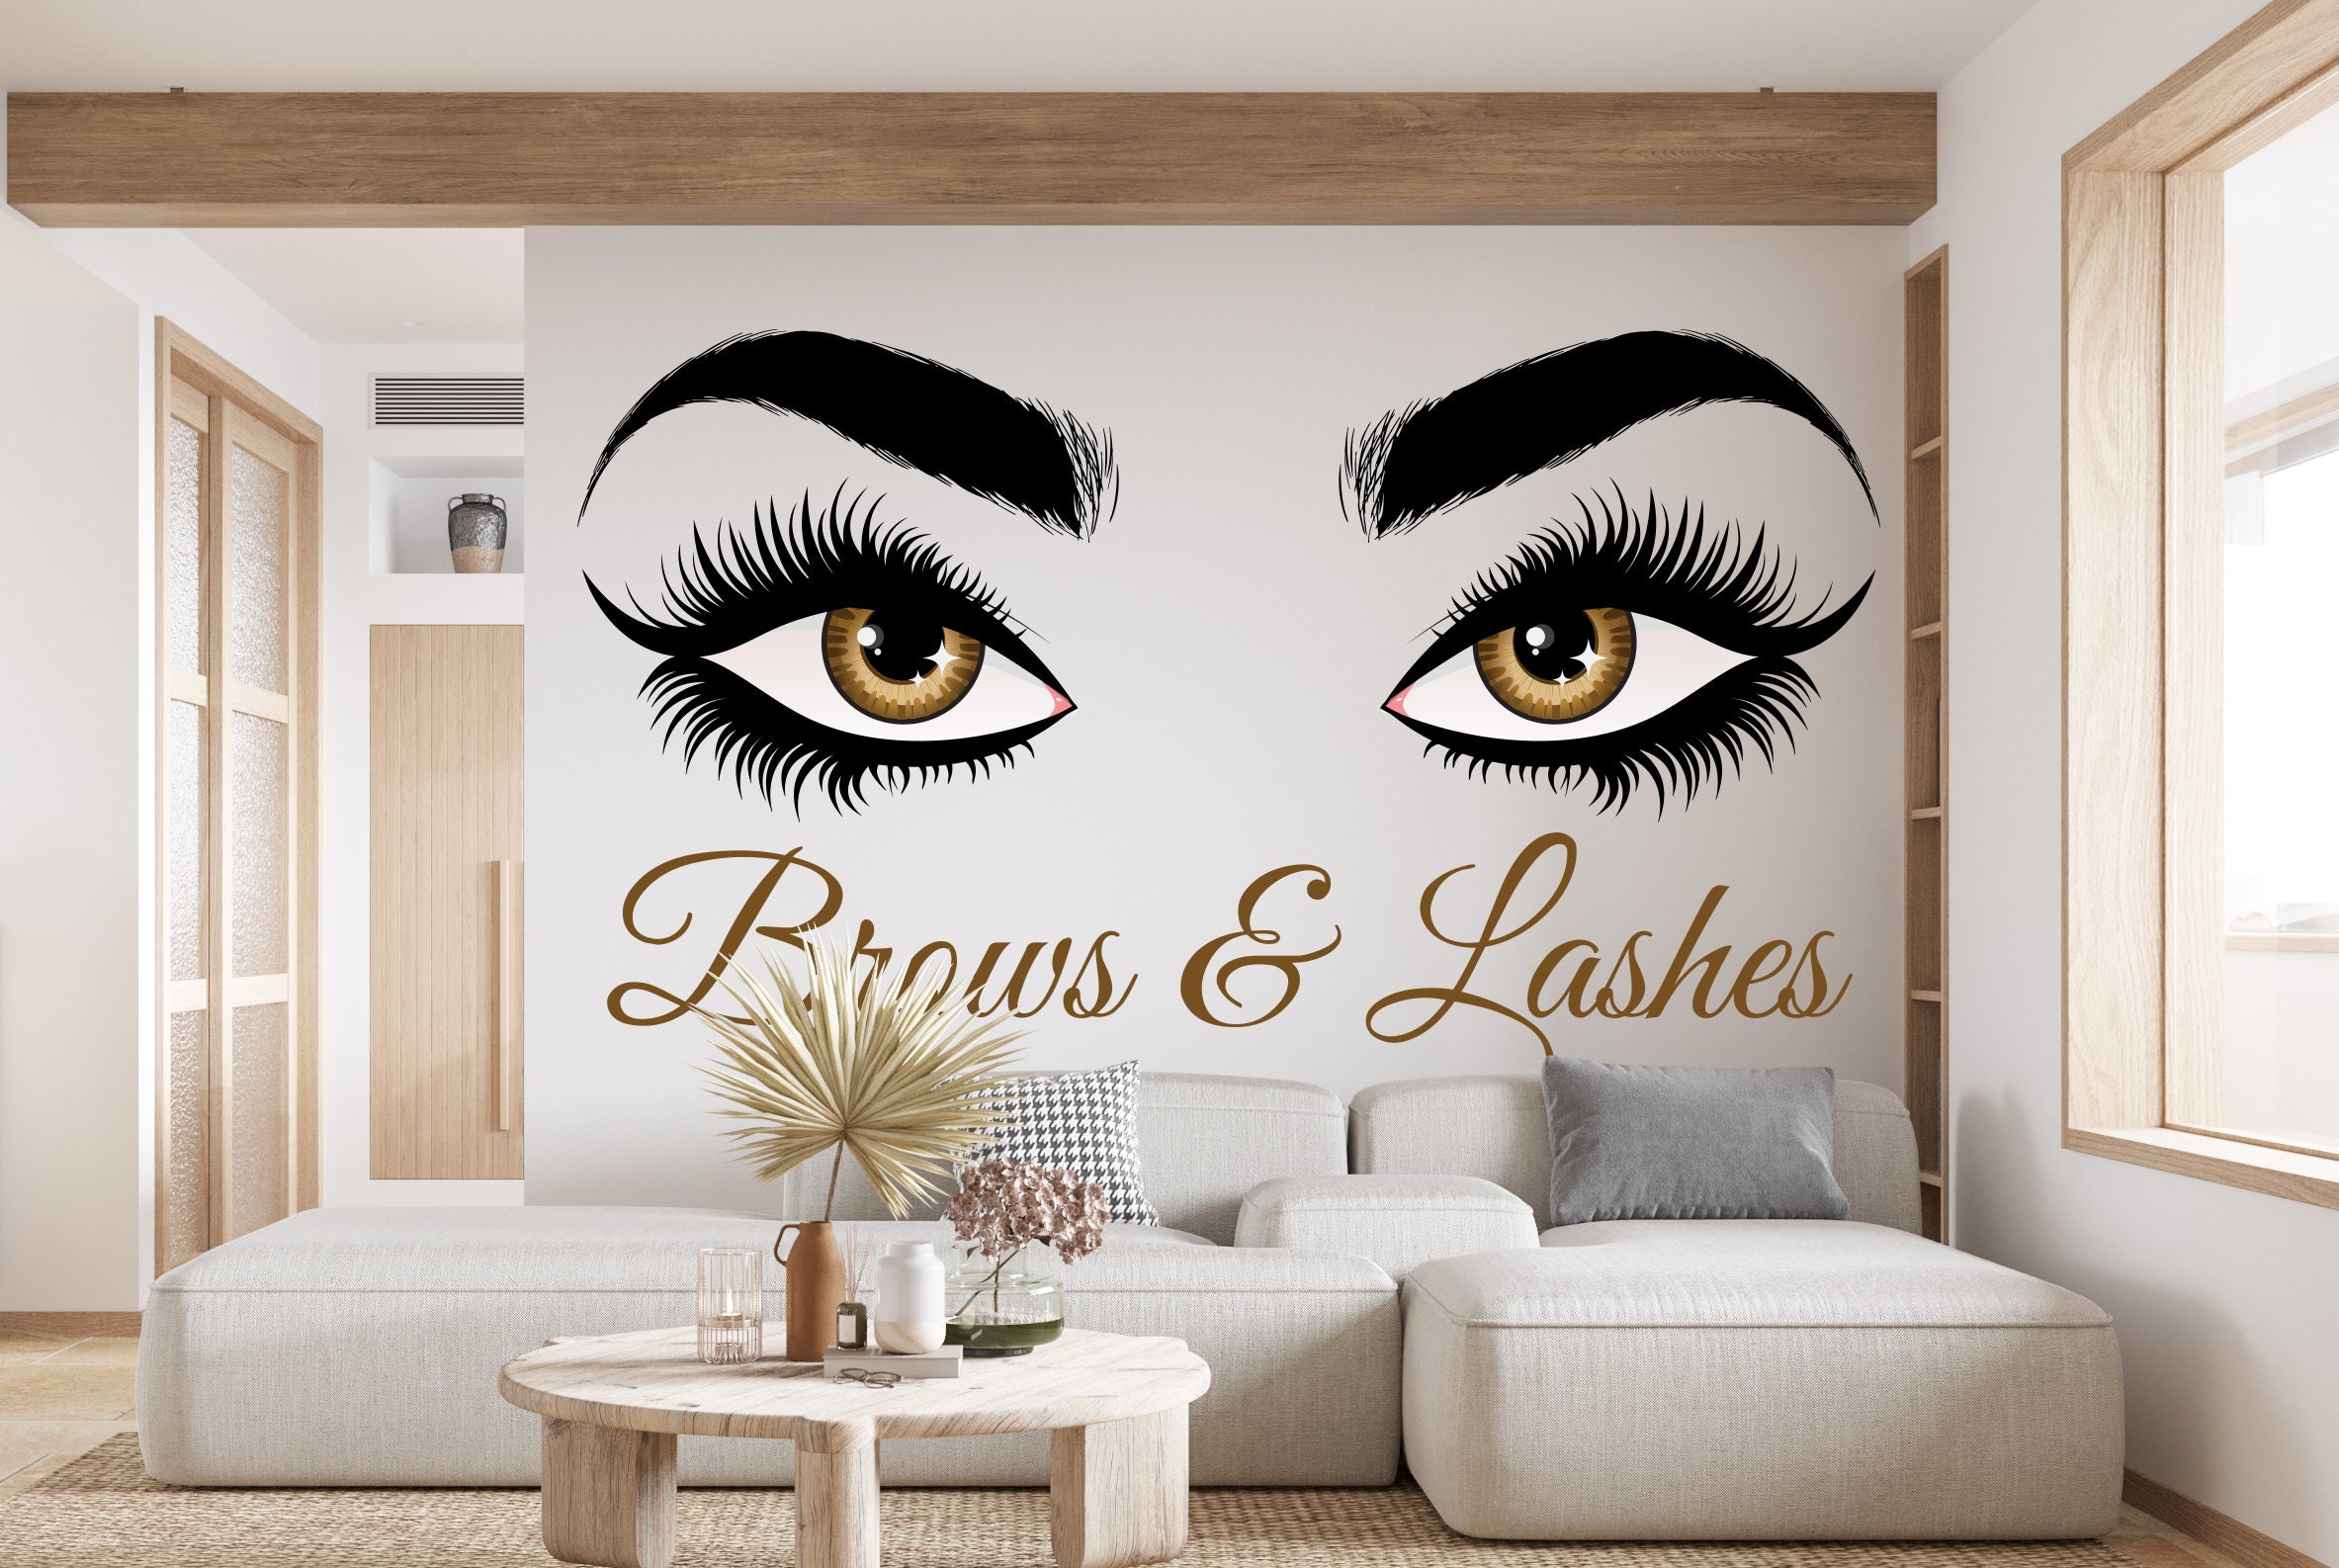 Lashes Logo Wall Decal Sticker Vinyl Home Decor Bedroom Art Make